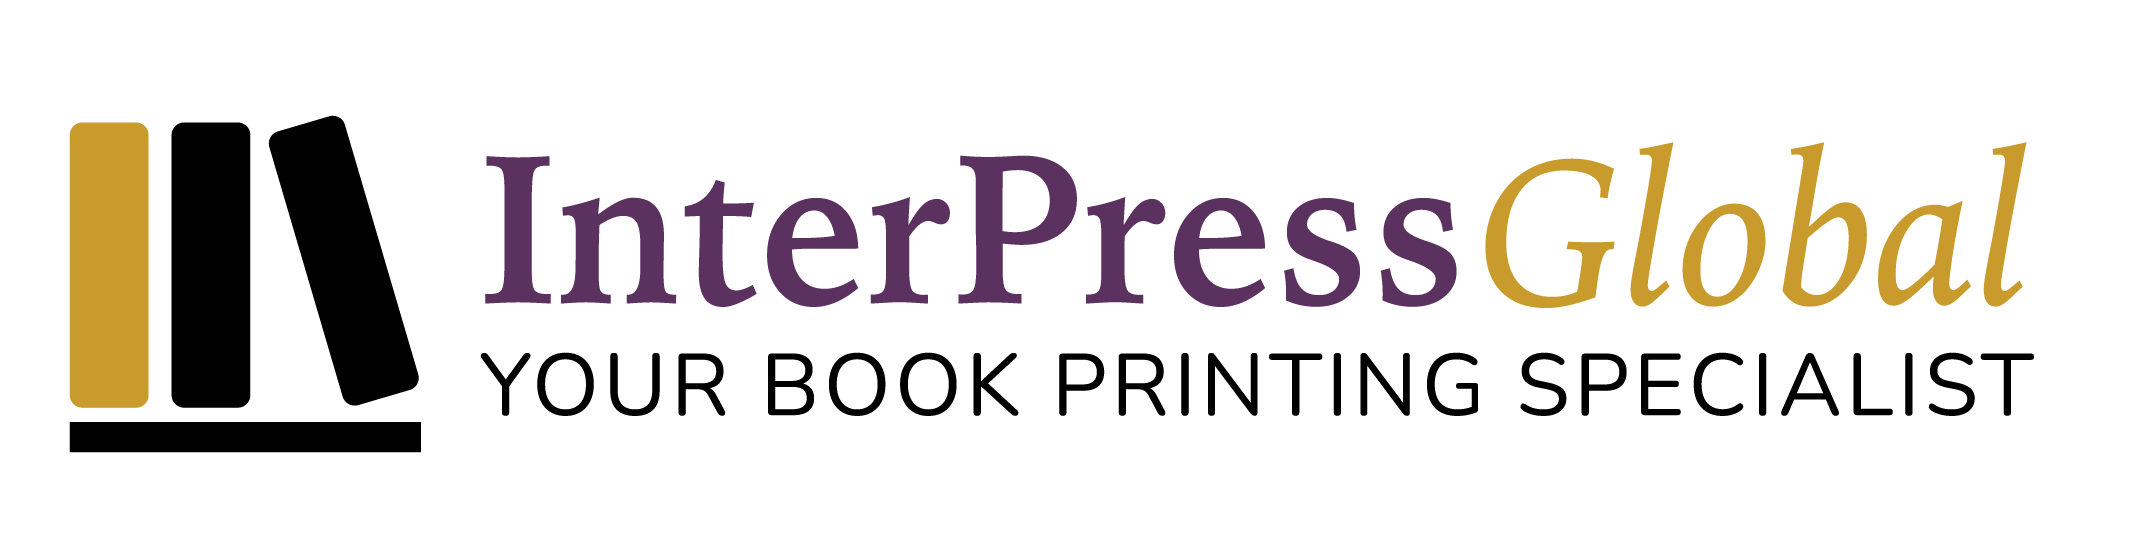 InterPress Global